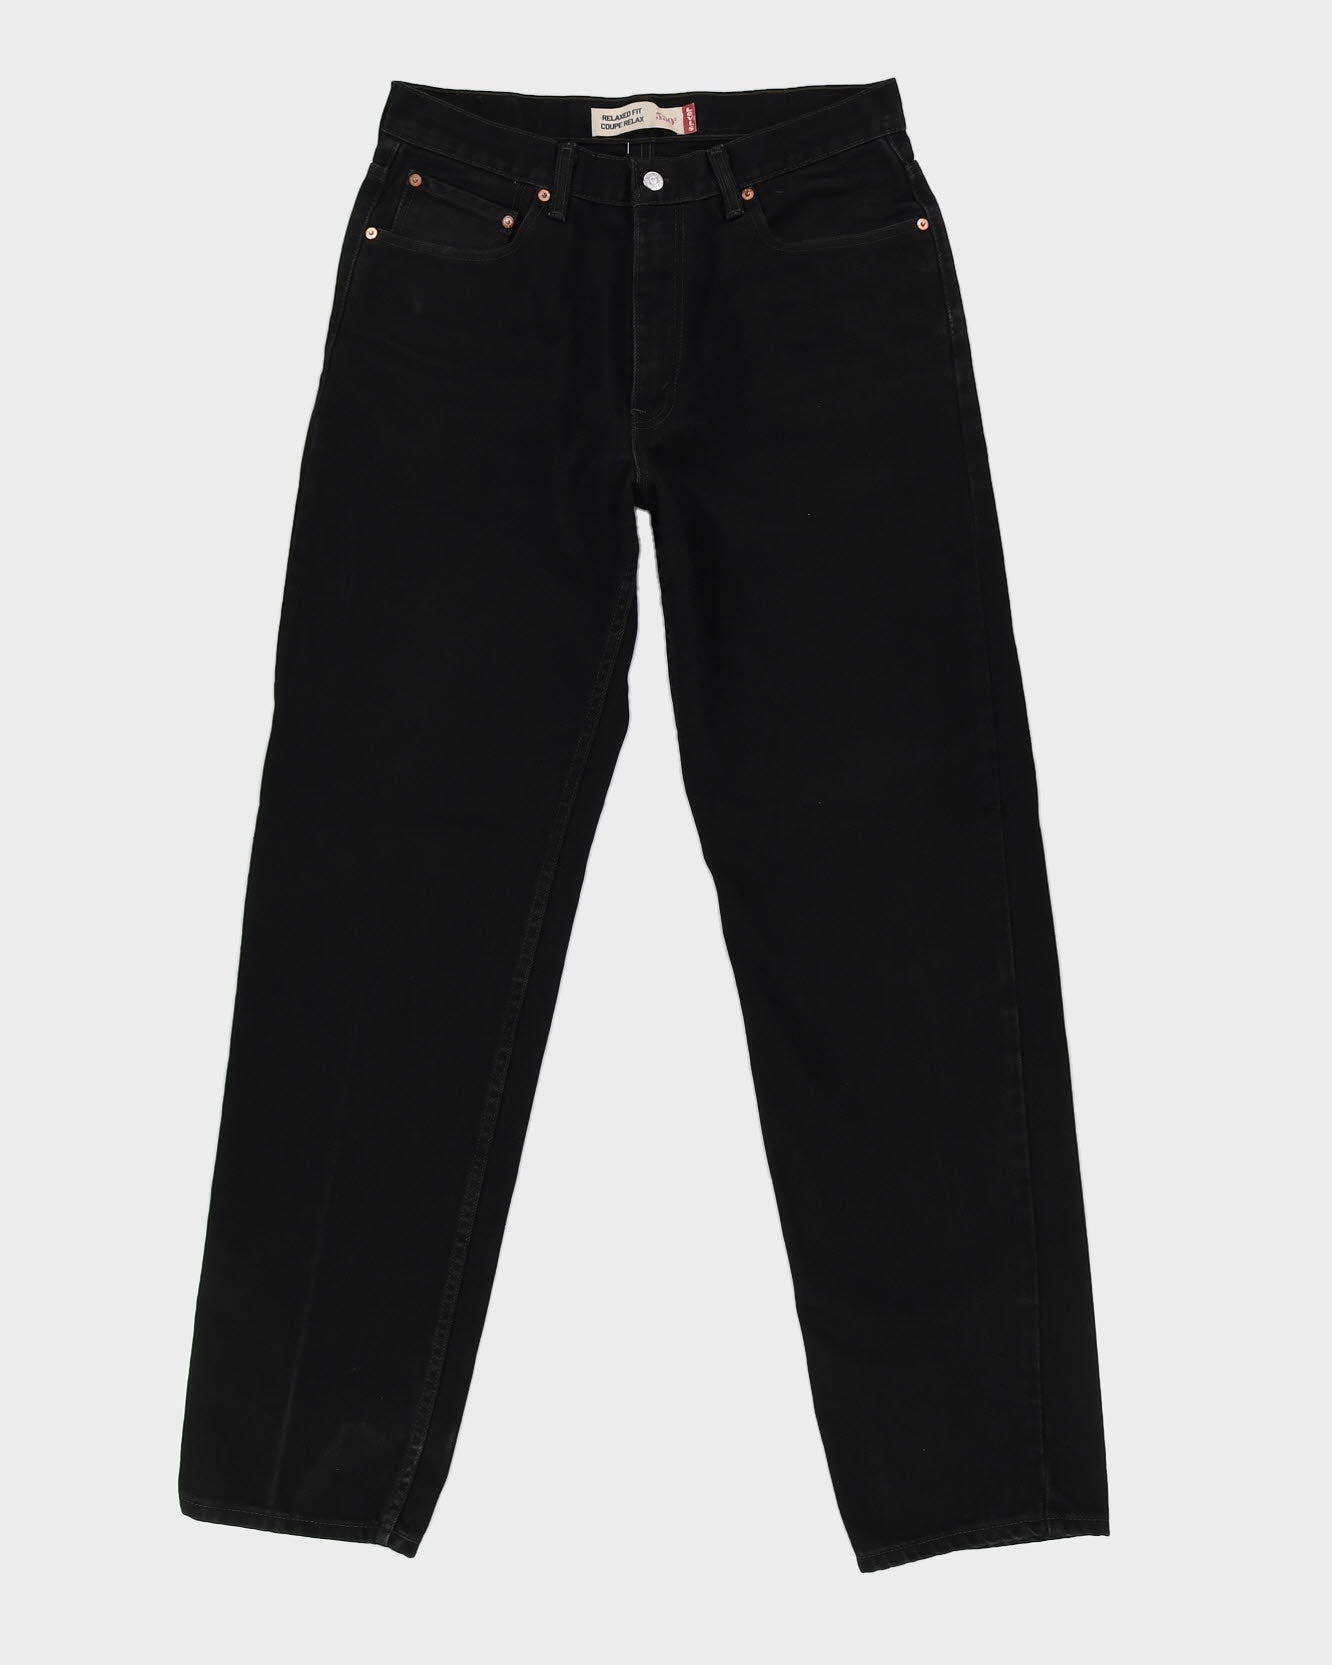 Levi's 550 Black Jeans  - W34 L 35